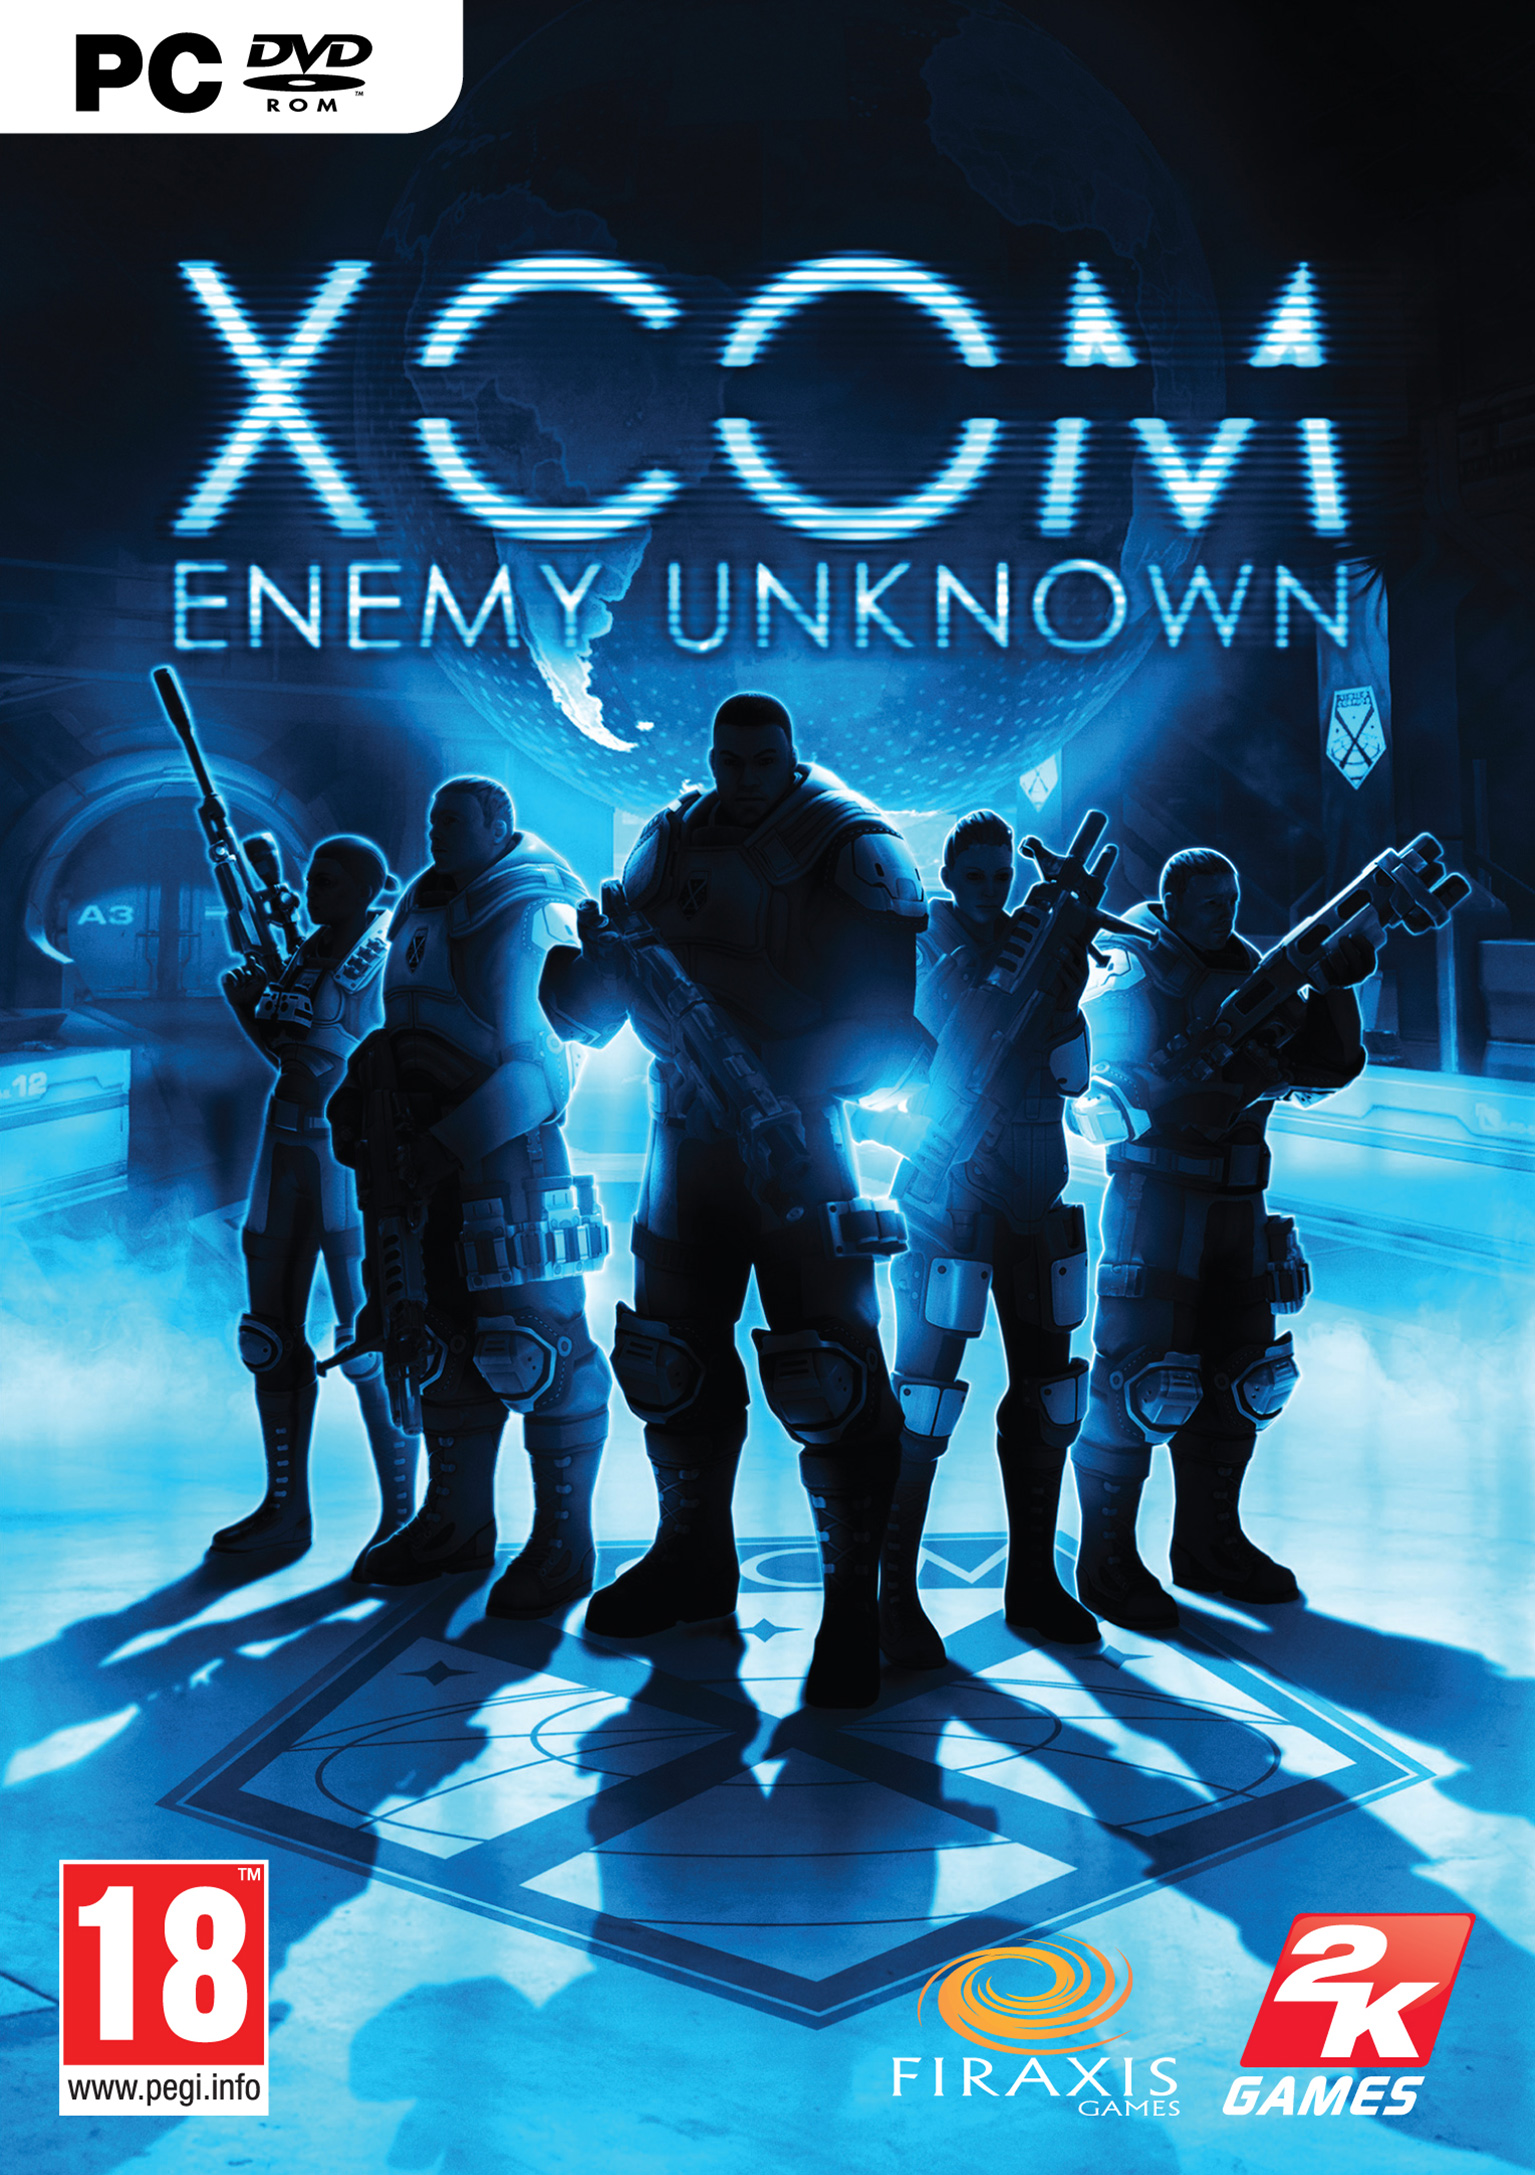 XCOM: Enemy Unknown - predn DVD obal